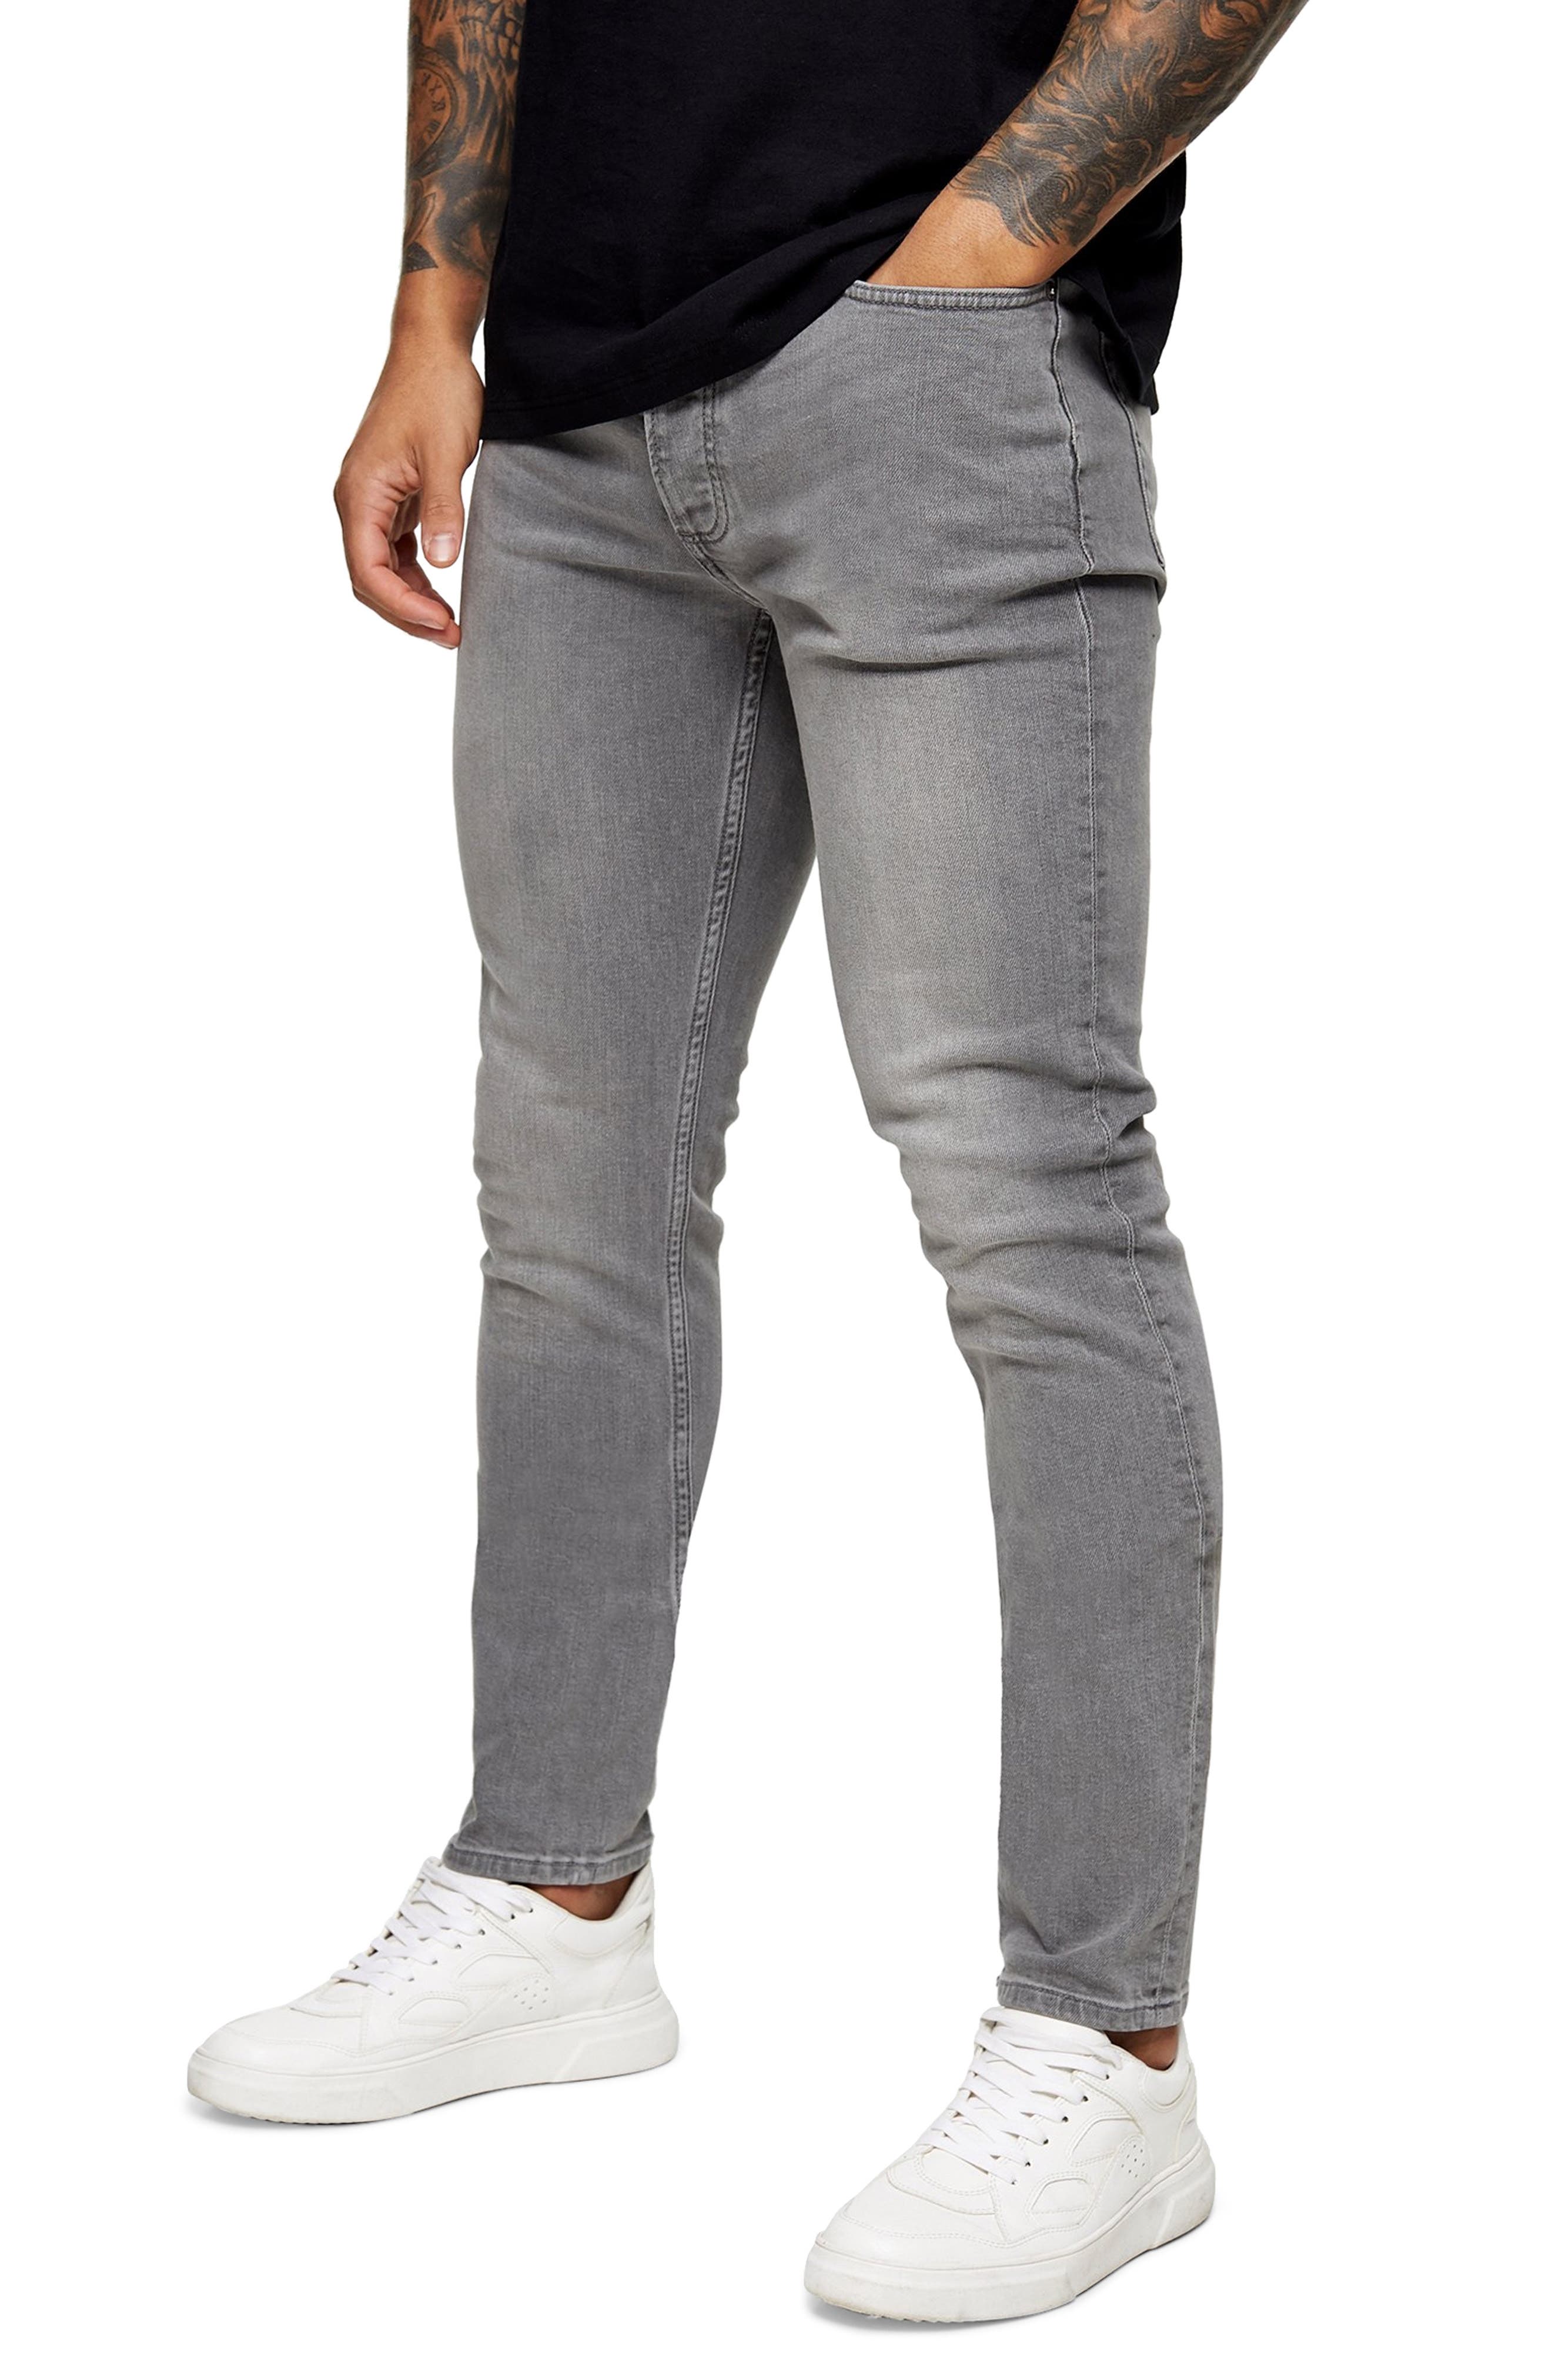 jeans grey